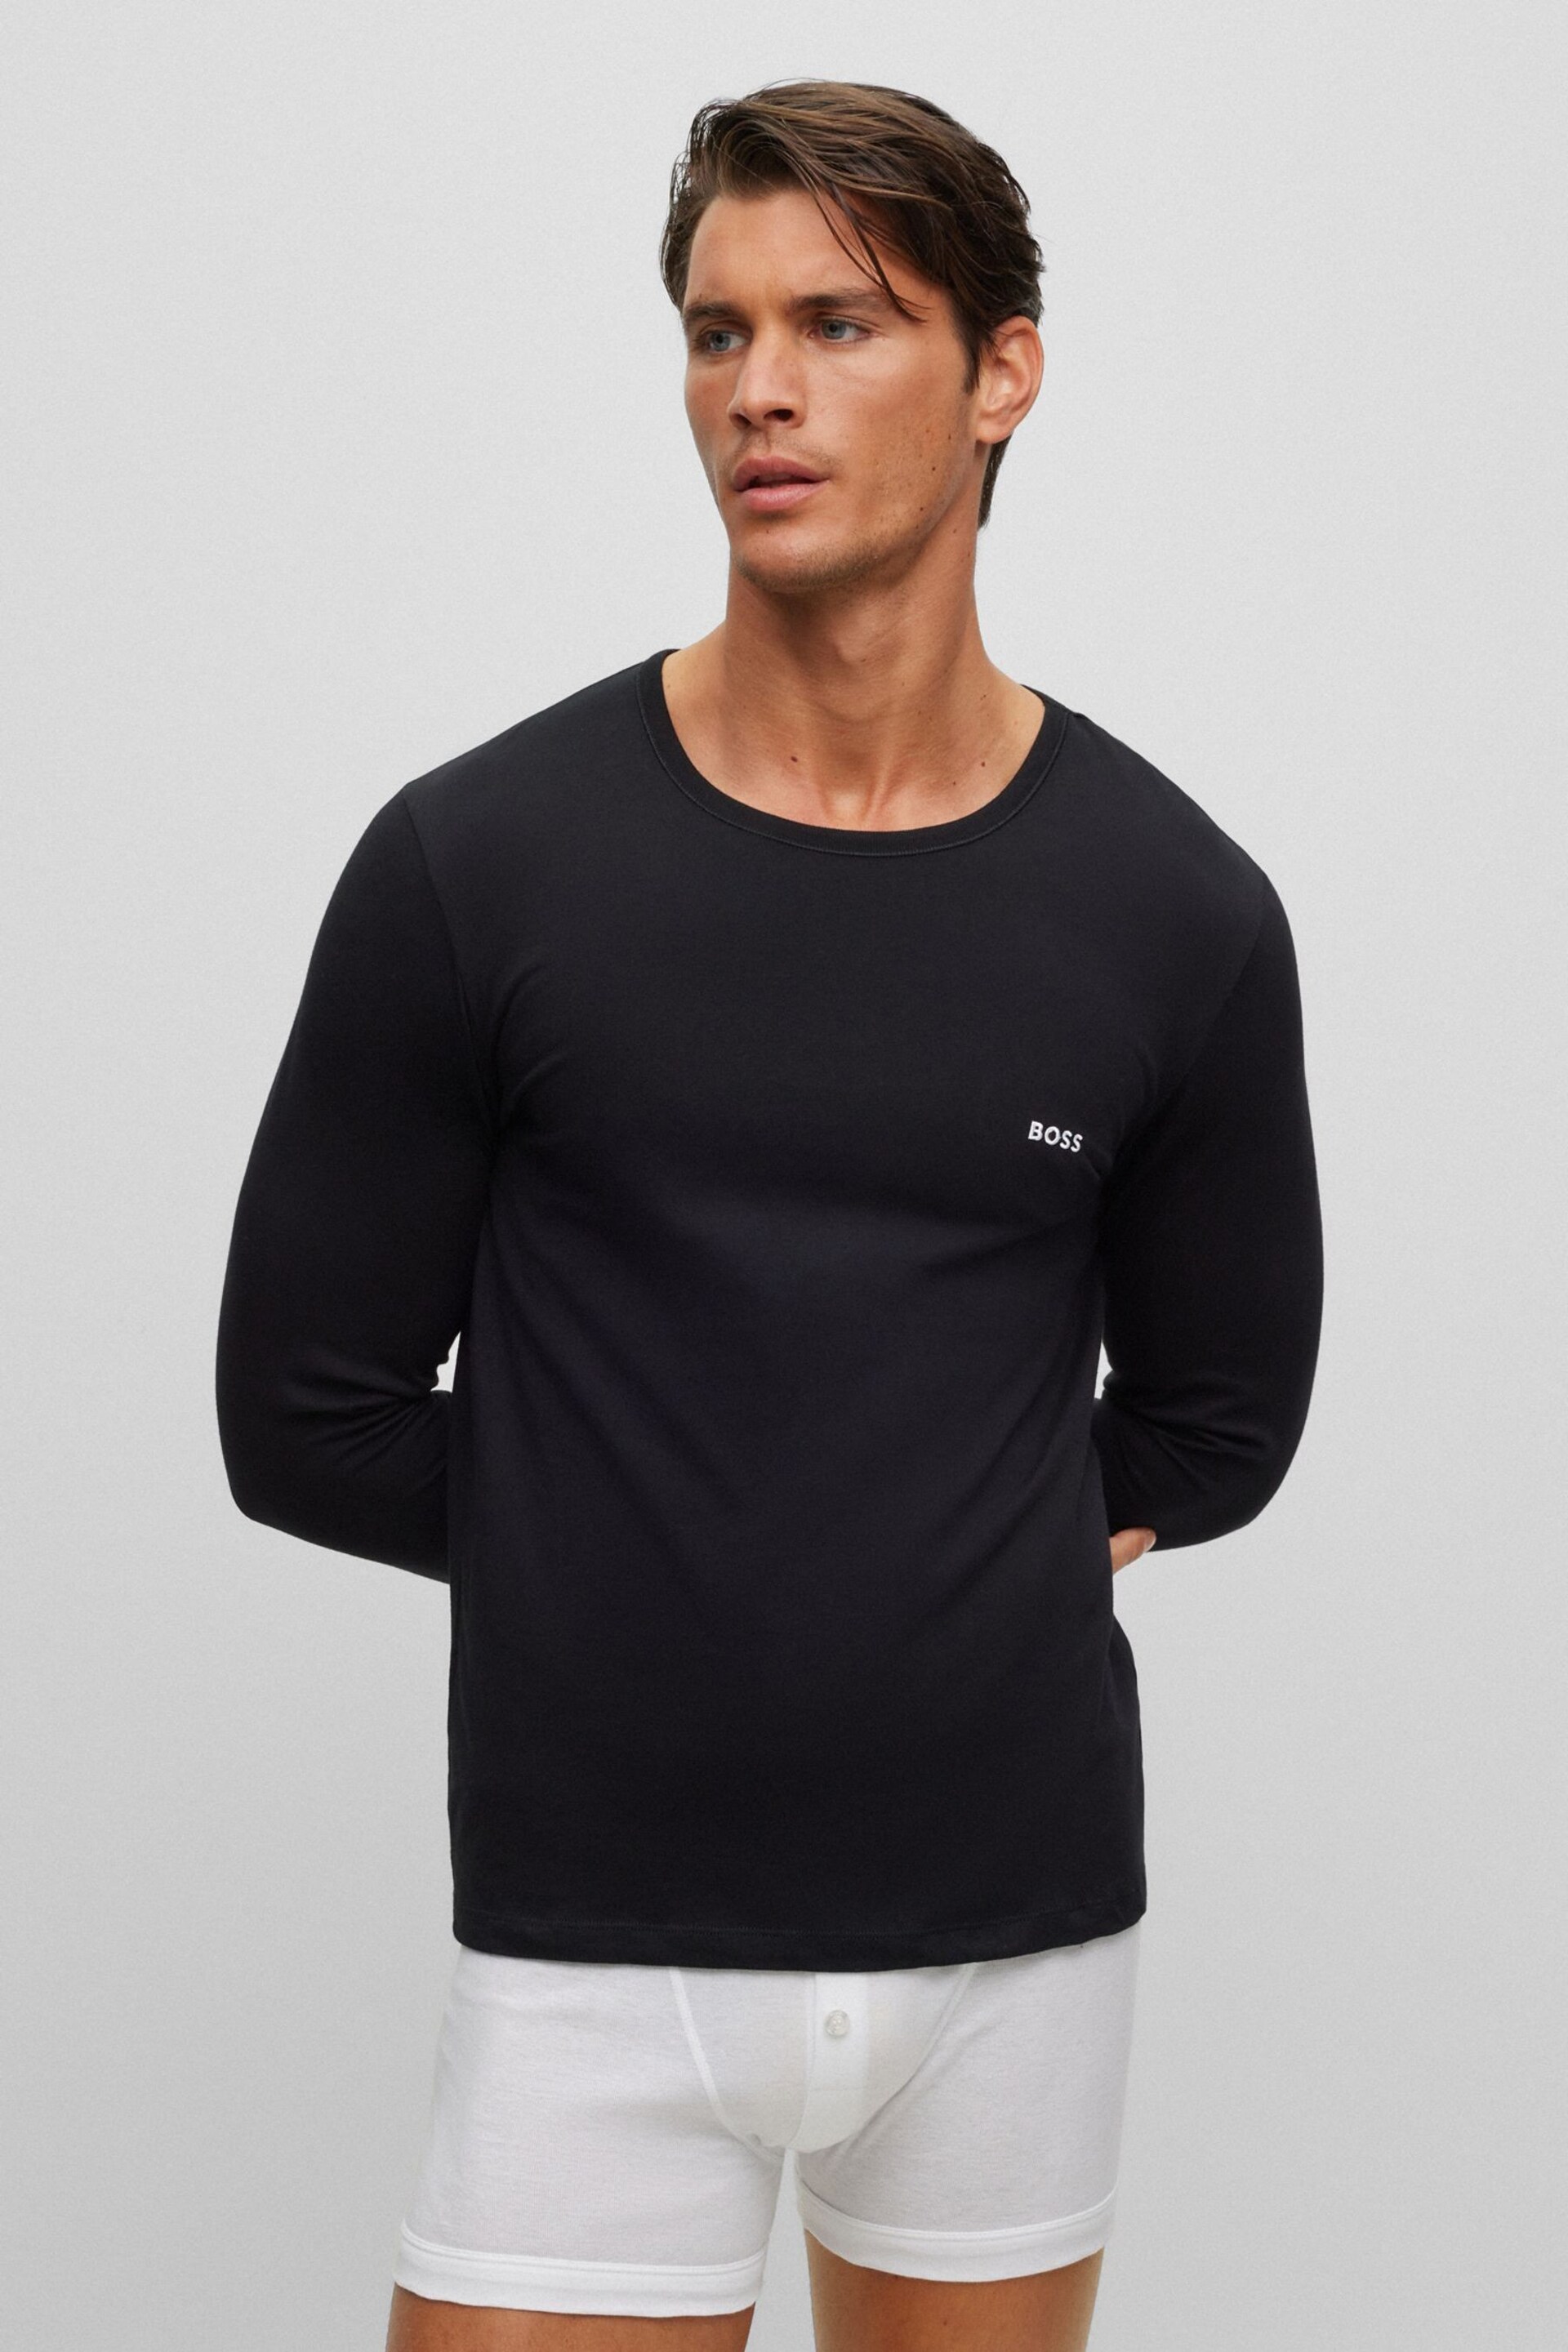 BOSS Black Long Sleeve T-Shirt 3 Pack - Image 6 of 9